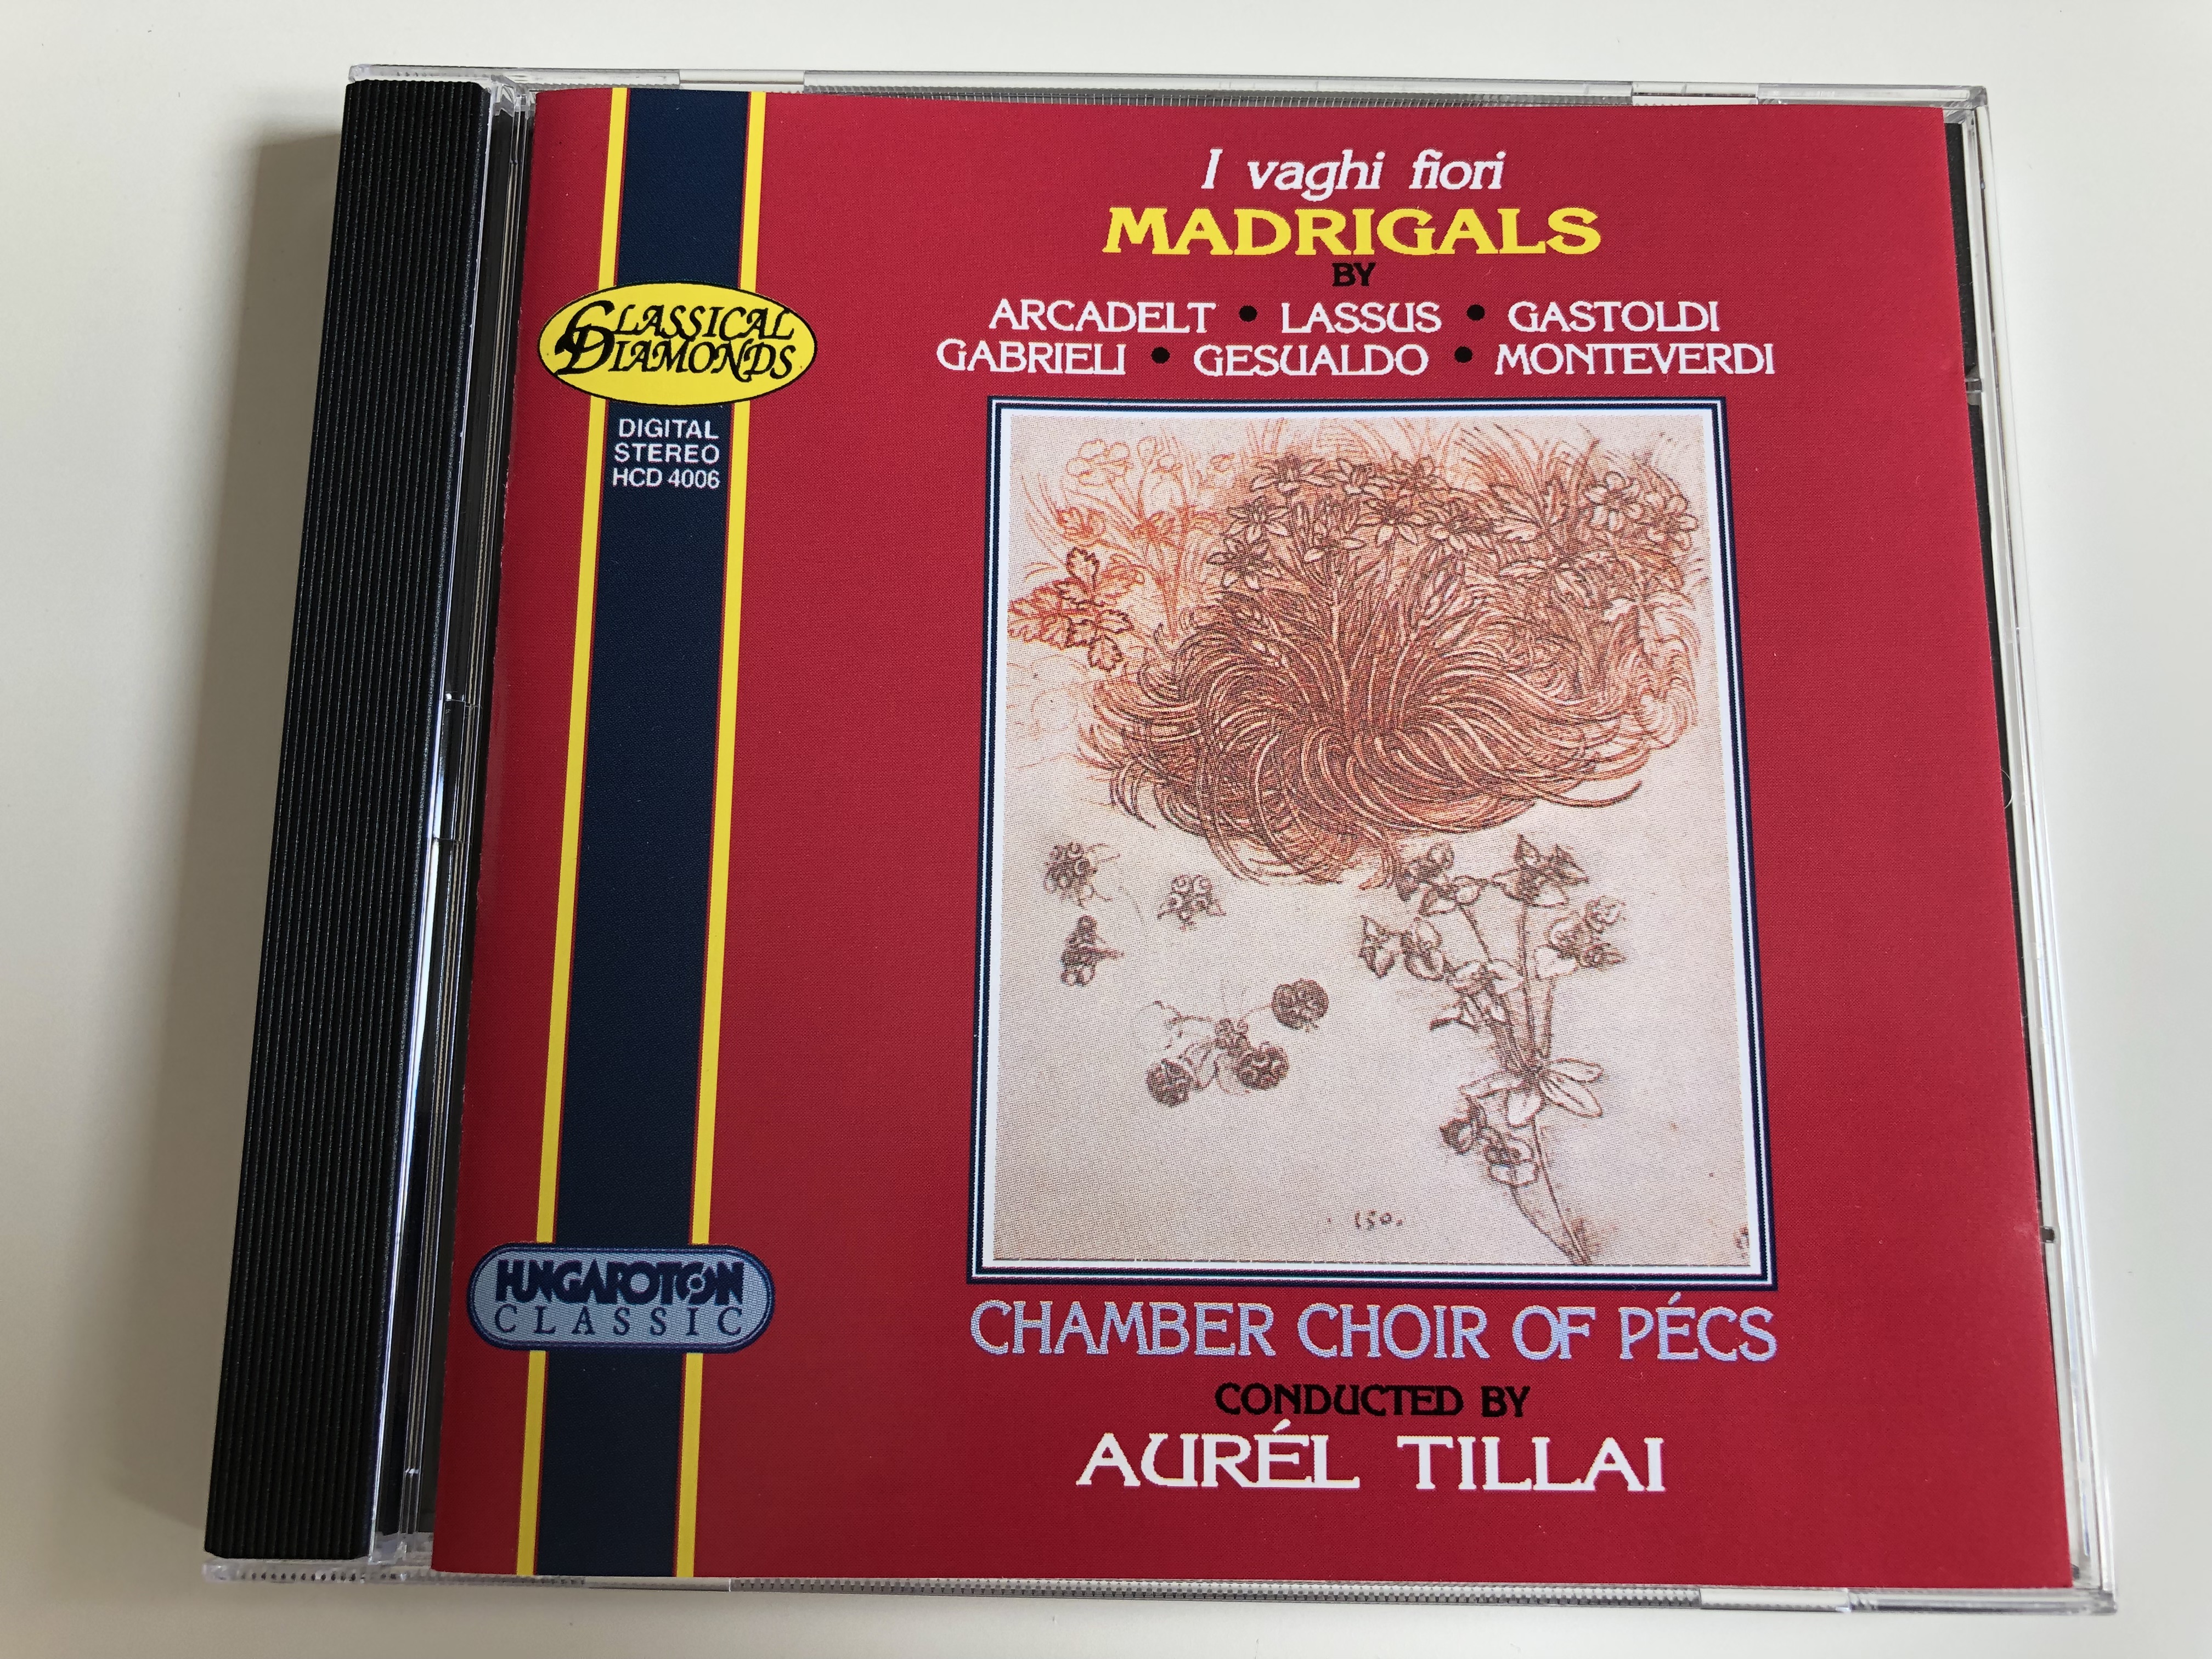 i-vaghi-fiori-madrigals-by-arcadelt-lassus-gastoldi-gabrieli-gesualdo-monteverdi-chamber-choir-of-p-cs-conducted-by-aur-l-tillai-hcd-4006-classical-diamonds-audio-cd-1995-1-.jpg